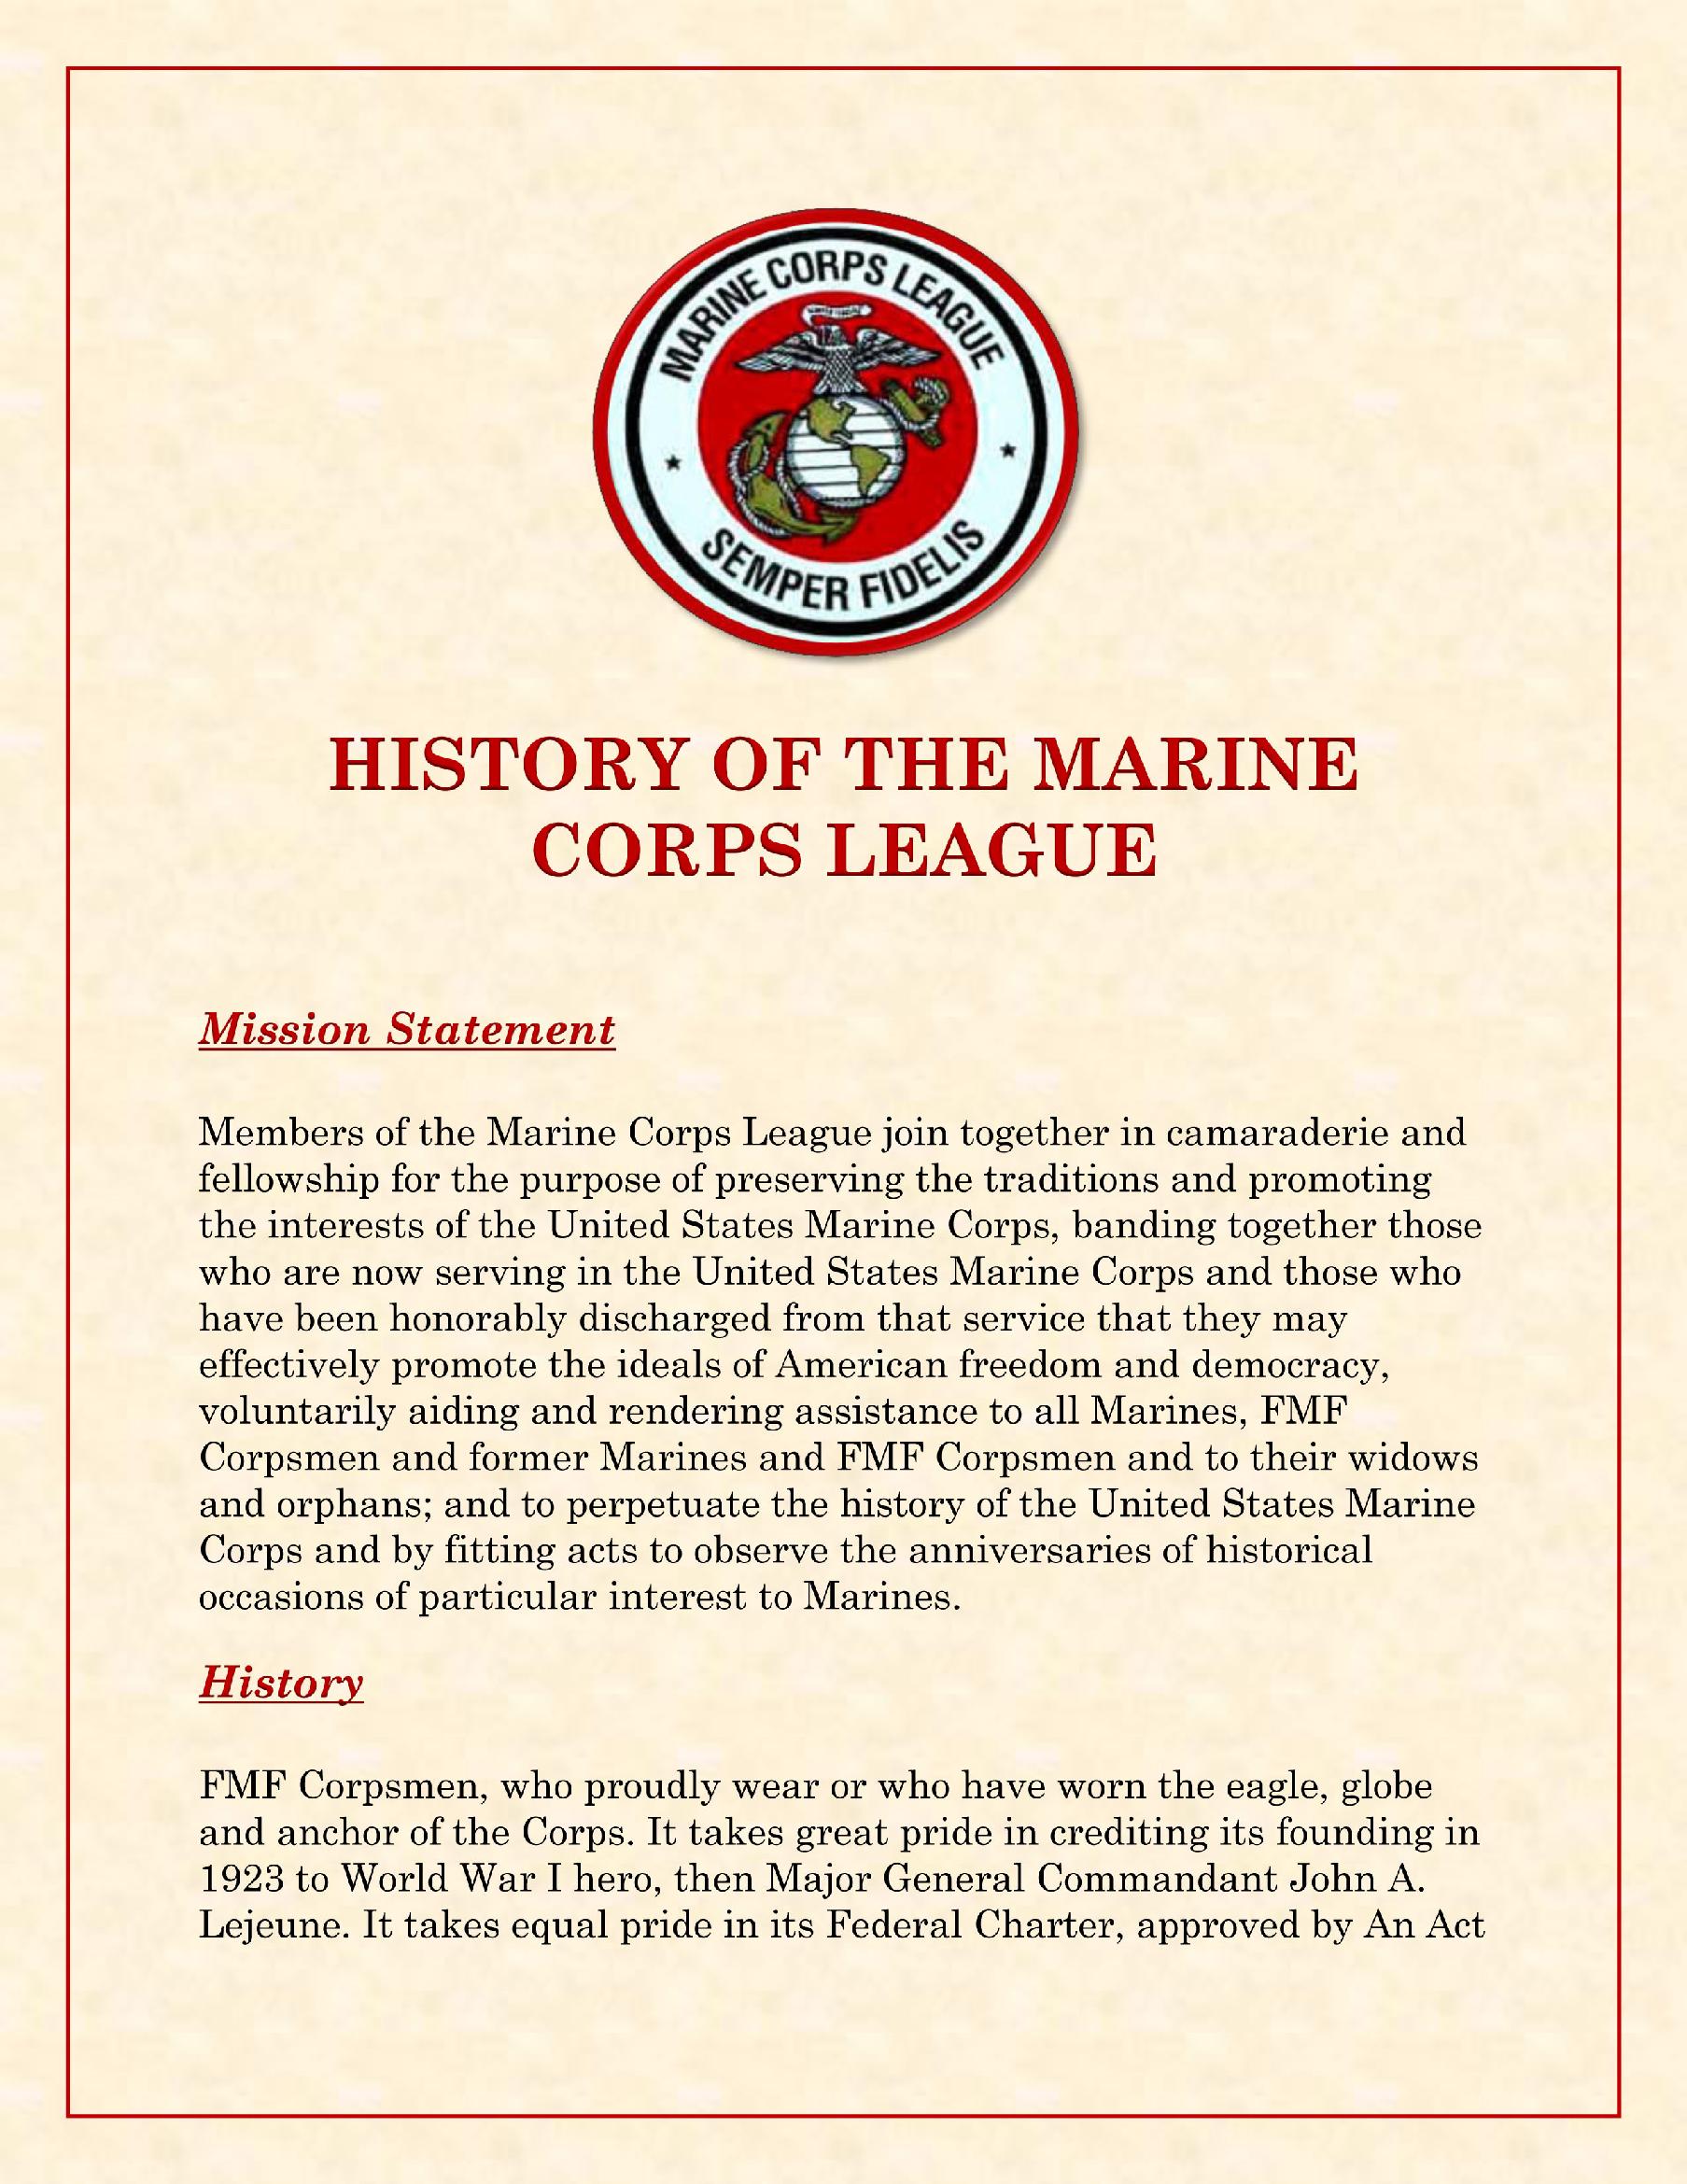 History of Marine Corps League